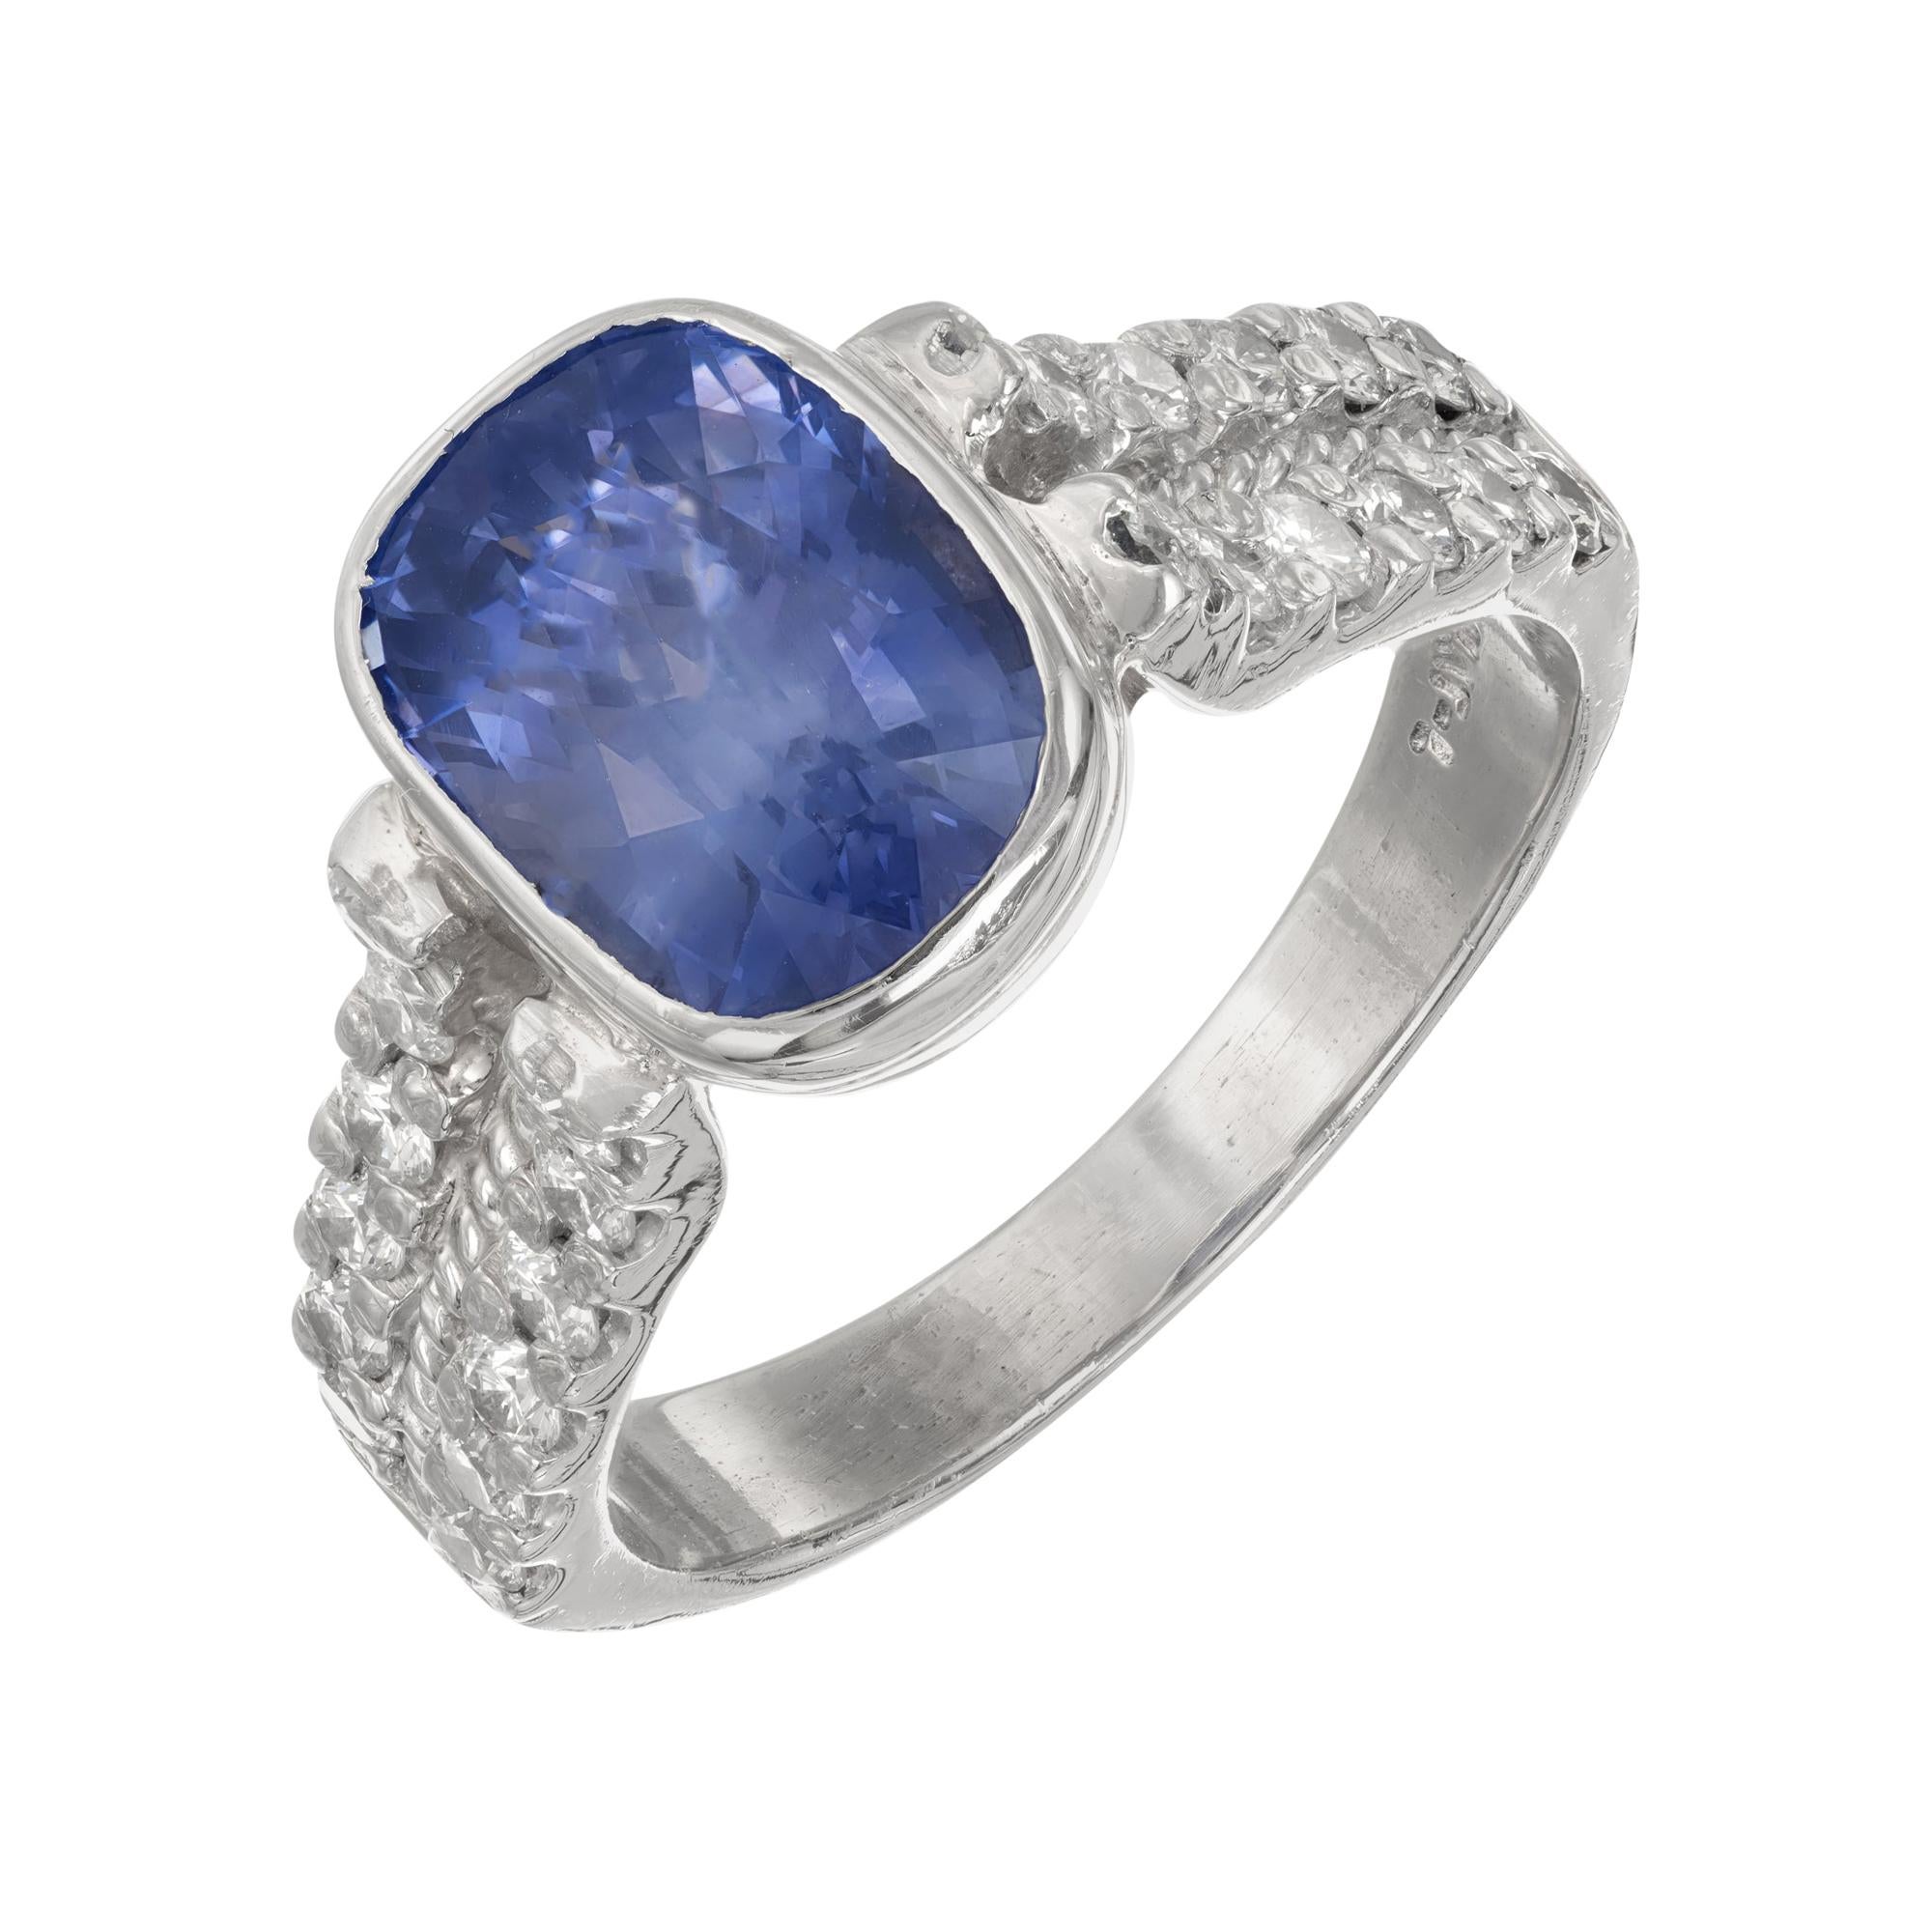 Peter Suchy 5.24 Carat Ceylon Sapphire Diamond Platinum Engagement Ring